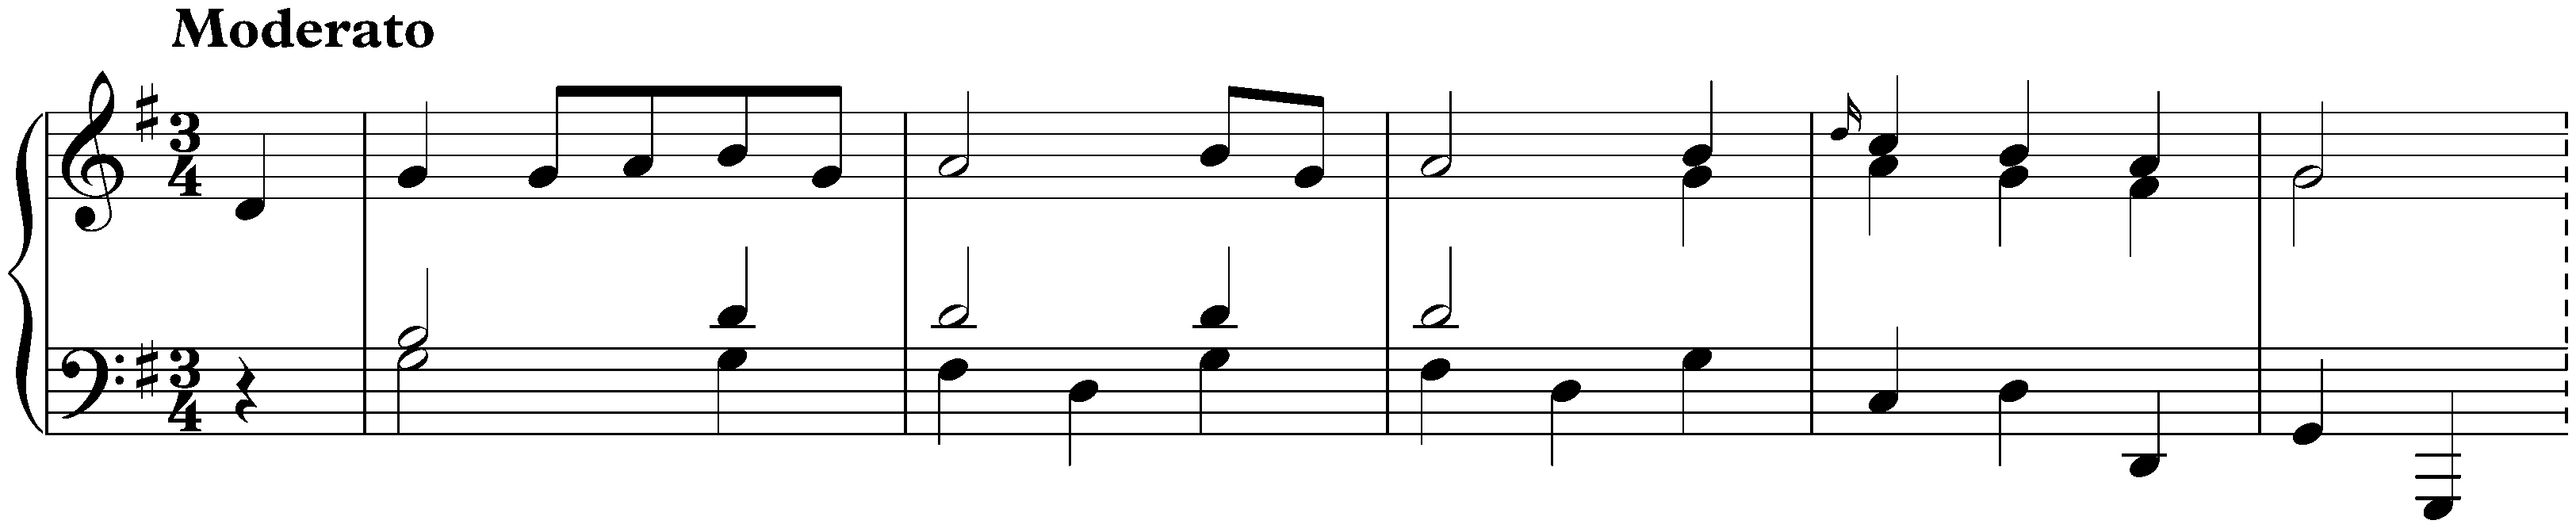 Capriccio in G major, Hob. XVII:1 (Acht Sauschneider müssen seyn)